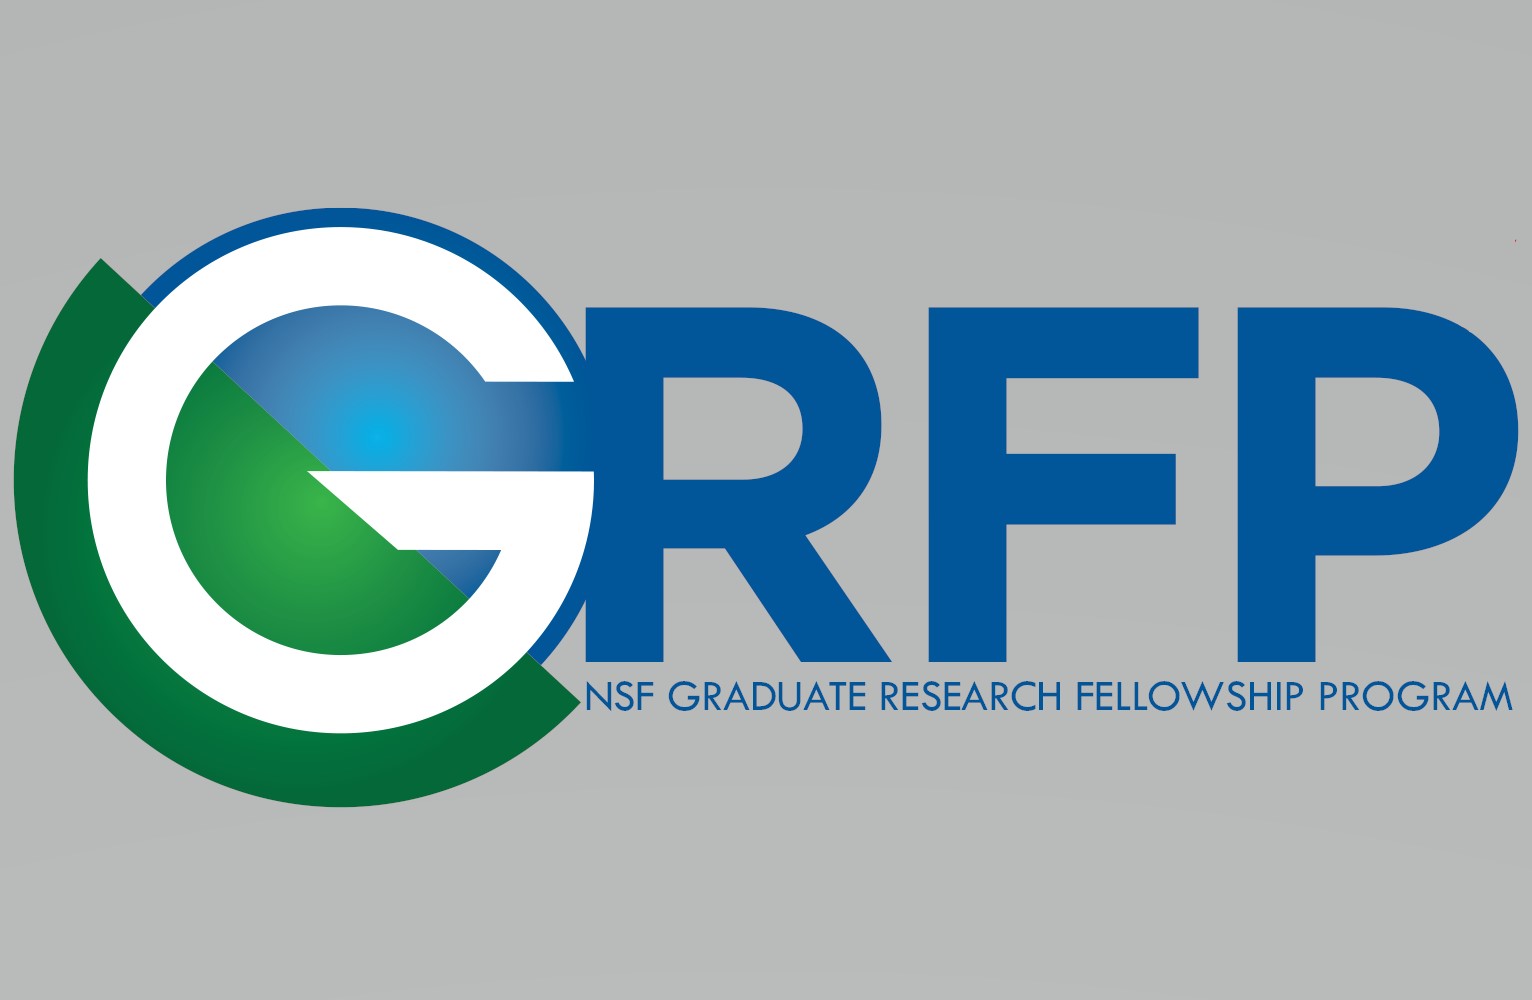 NSF’s Graduate Research Fellowships